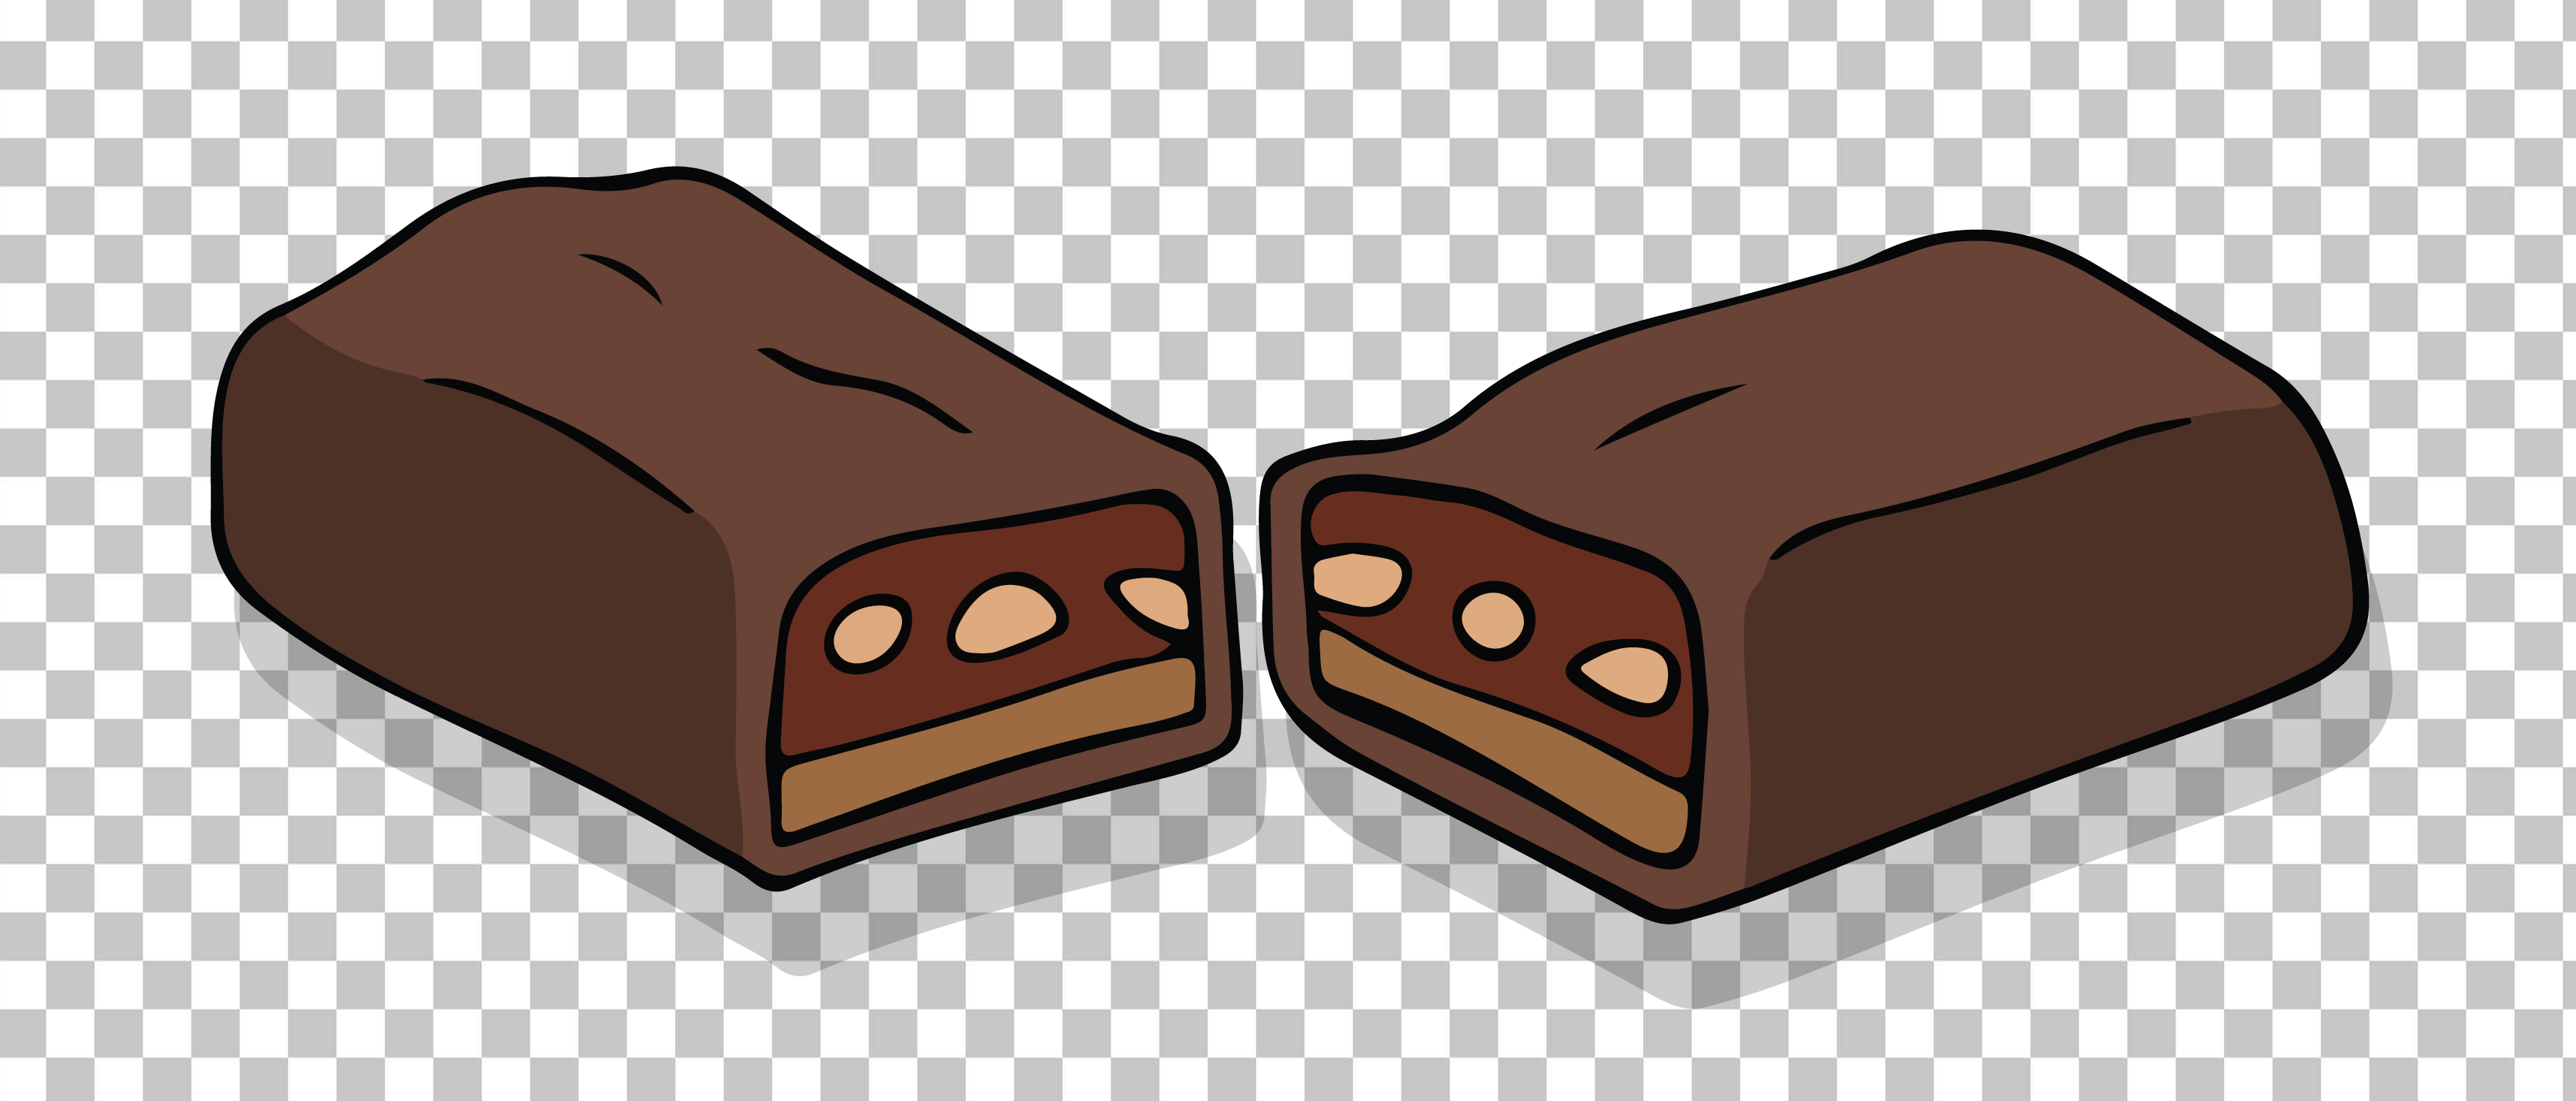 Chocolate Bar cut in half PNG Image